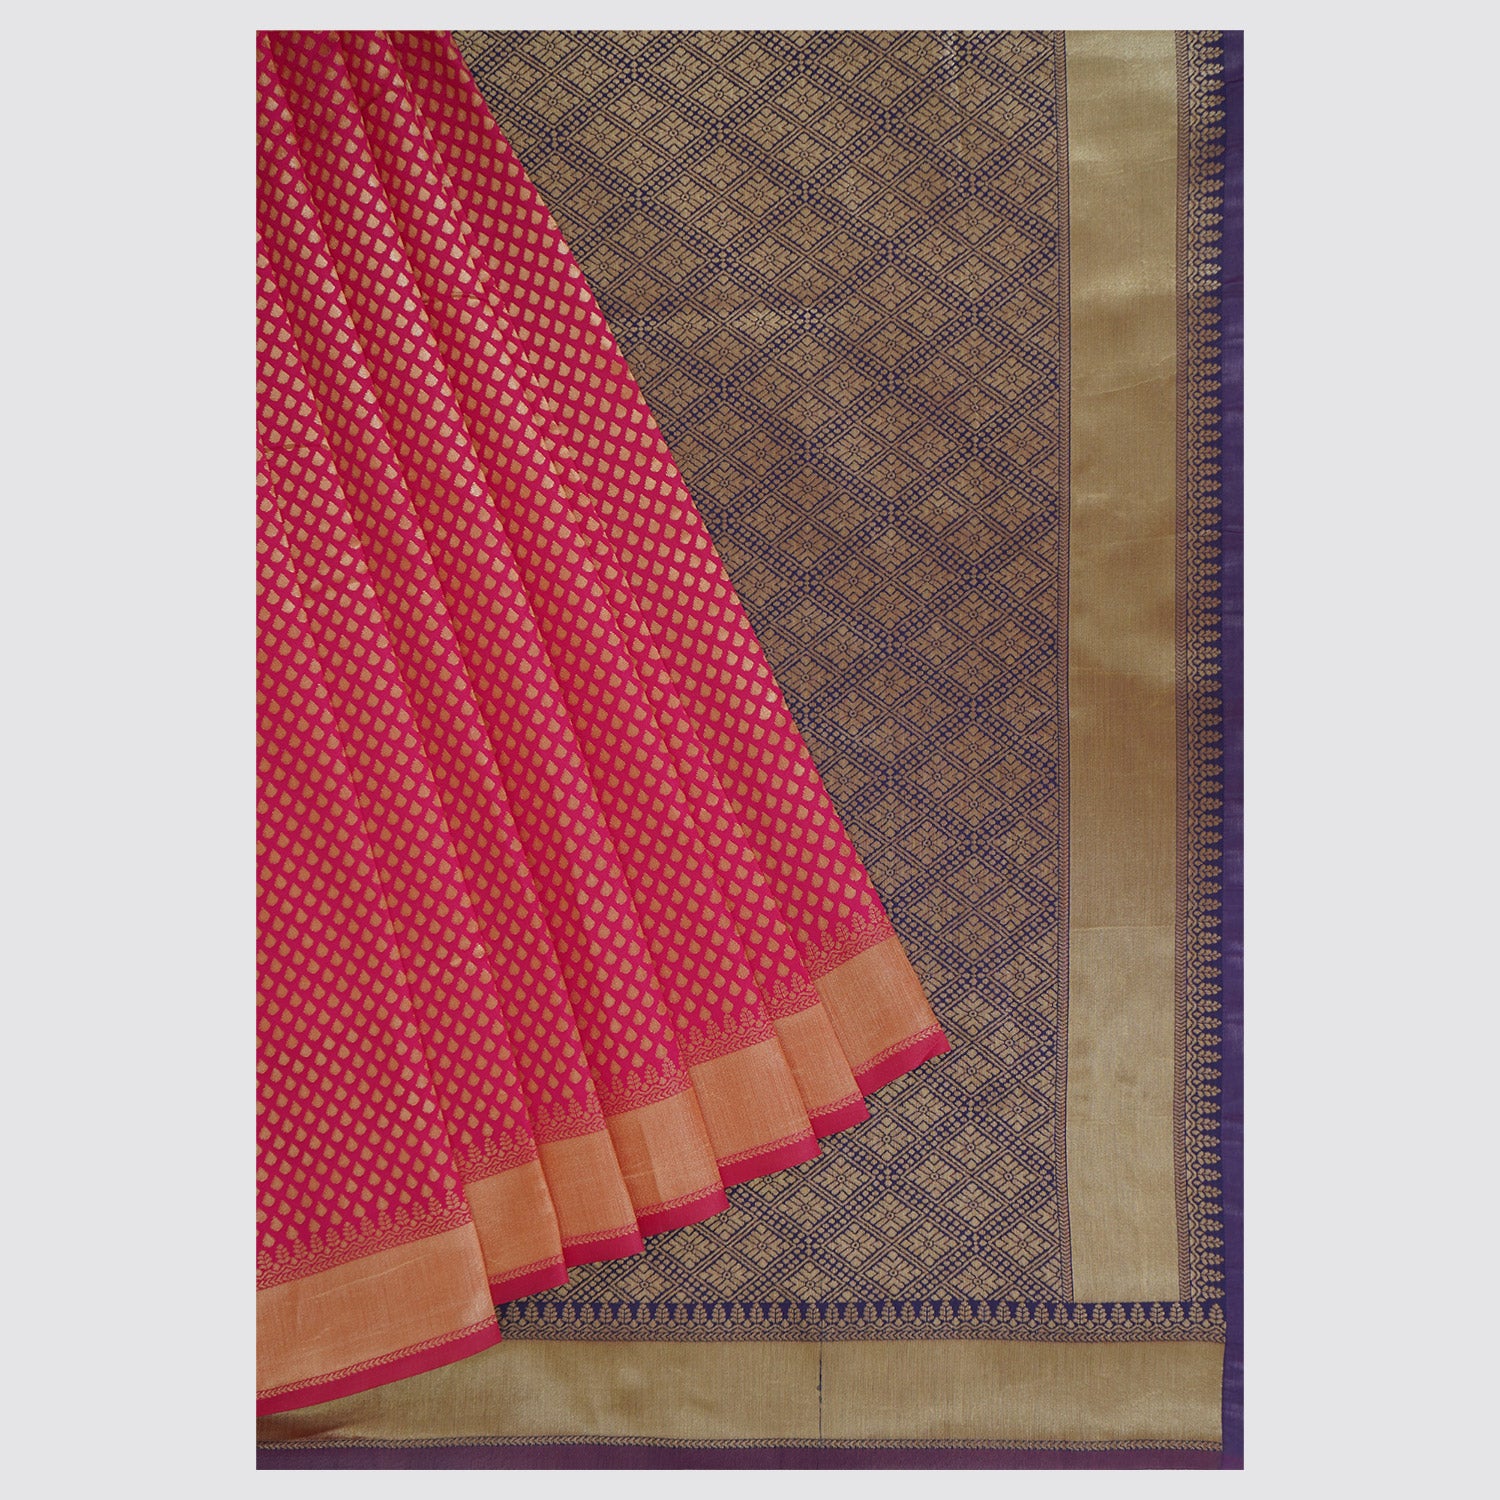 Pink Silk Saree, Zari Butti Design, Traditional Indian Attire, Wedding Saree, Festive Wear, Elegant Ethnic Wear, Handcrafted Silk, Bloomaya Sarees, Premium Quality Fabric, Exclusive Saree Collection.